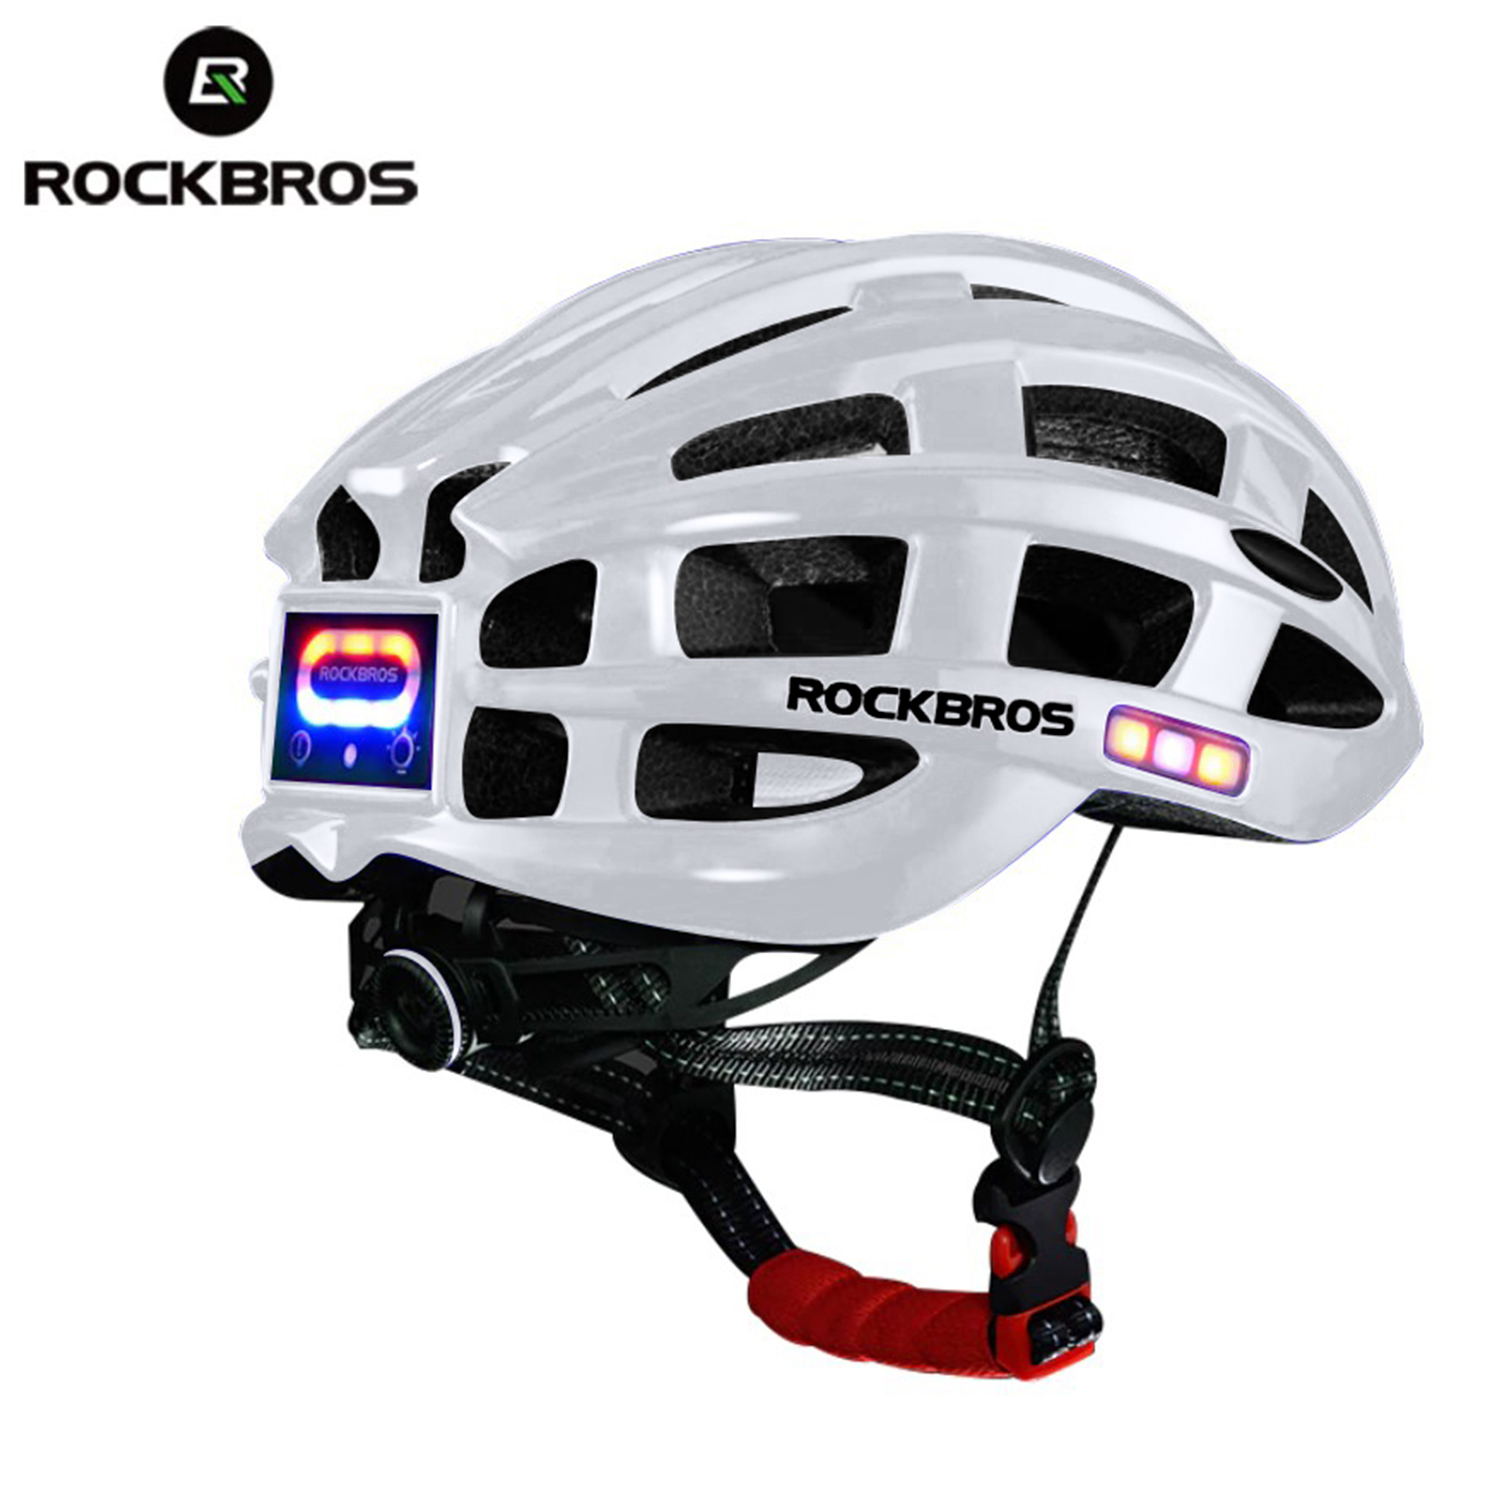 kål cigar Rynke panden Rockbros Ultralight Intergrally Moulded LED MTB Cycling Helmet with Lights  | RockBros